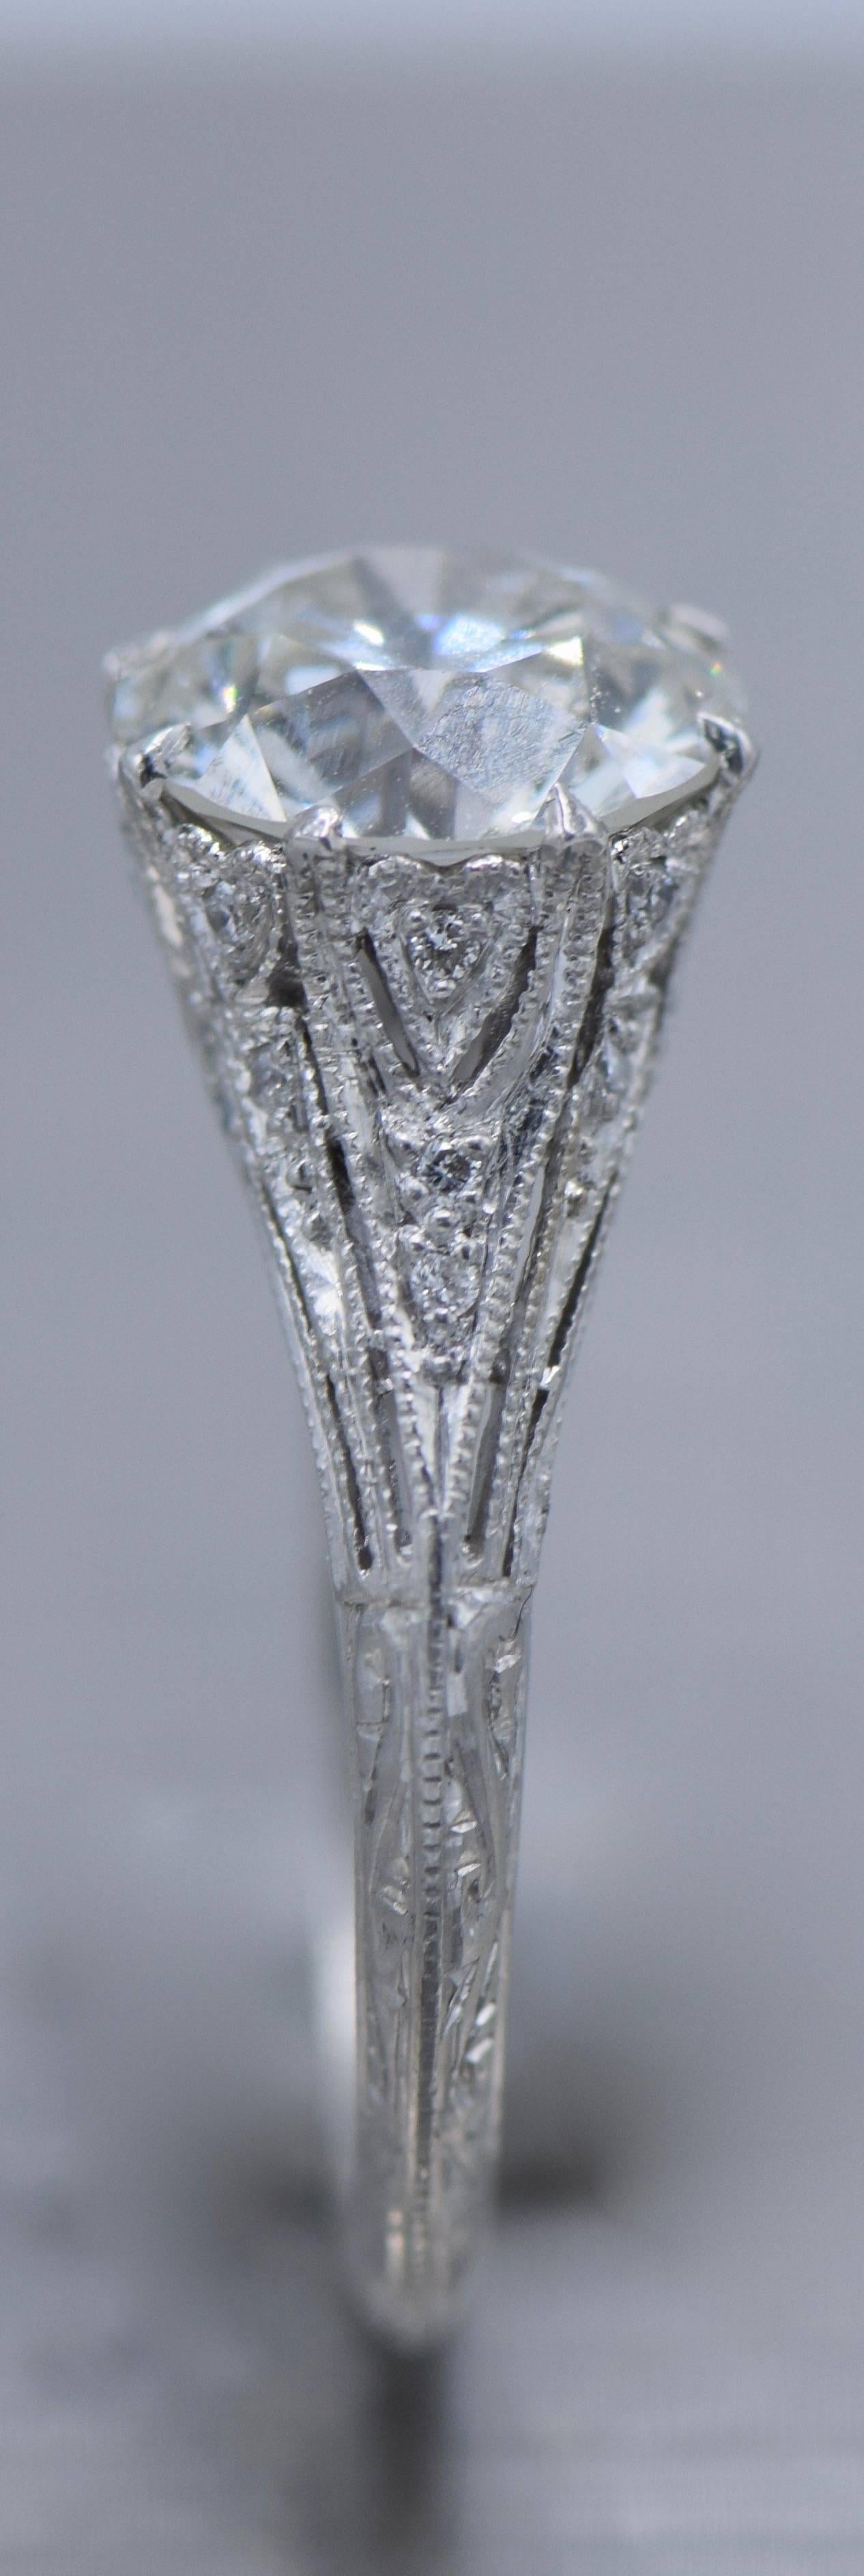 GIA Certified 1.94 Carat Diamond and Platinum Ring 

Size: 4.75

